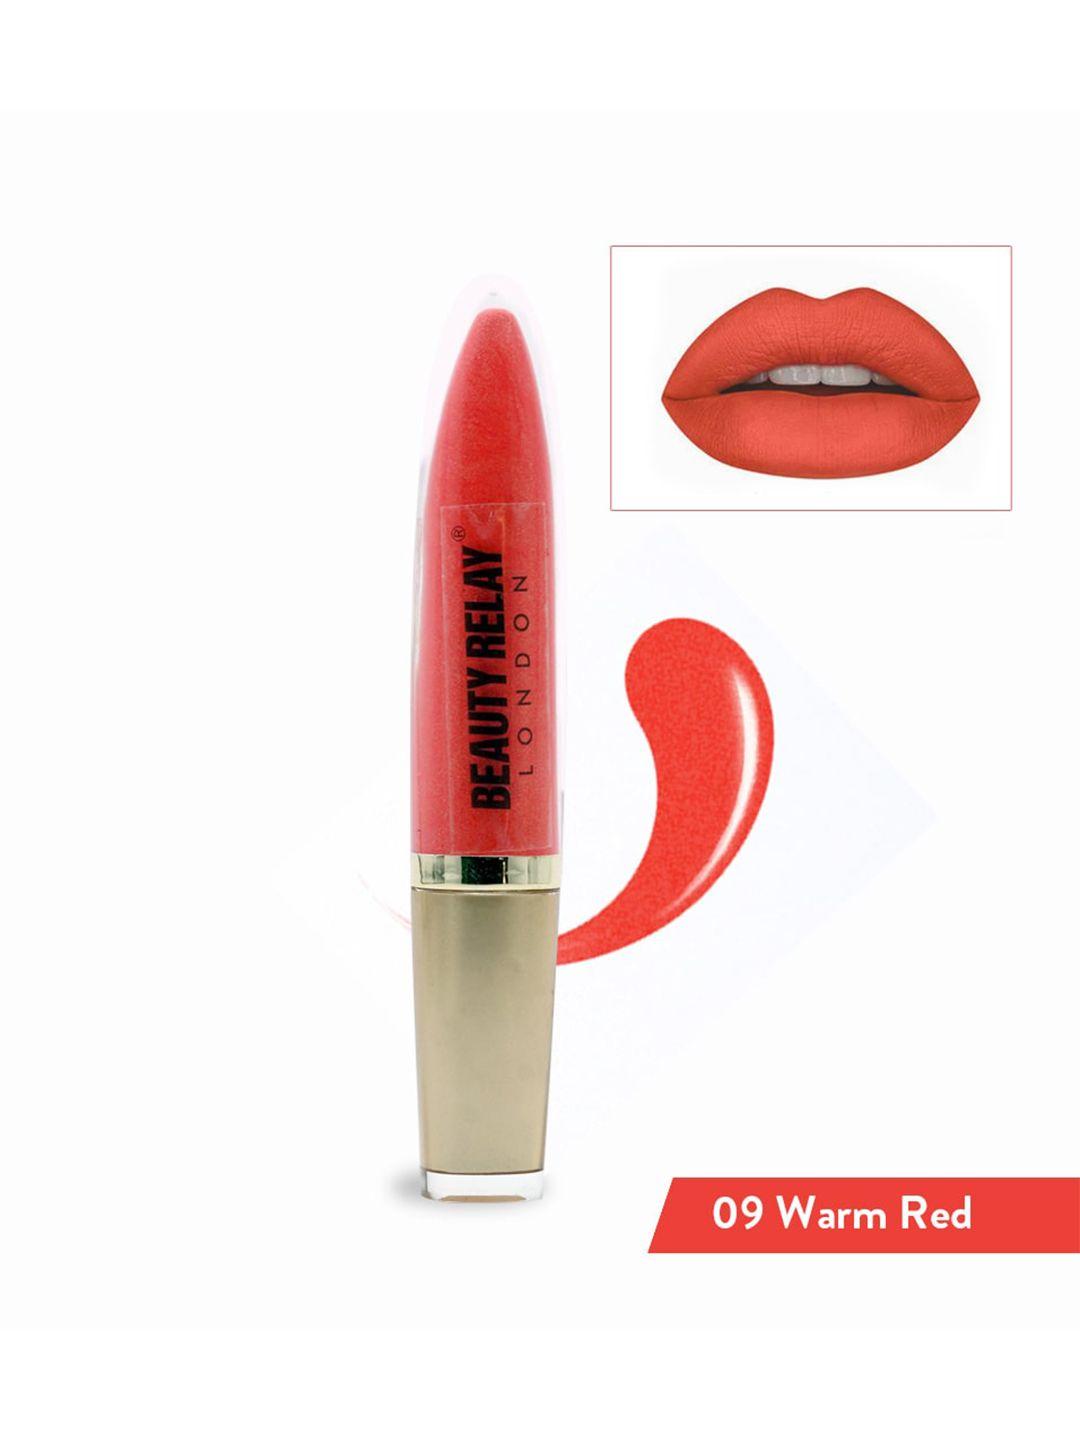 beautyrelay london marker lip & cheek gleam lip gloss 5g - warm red